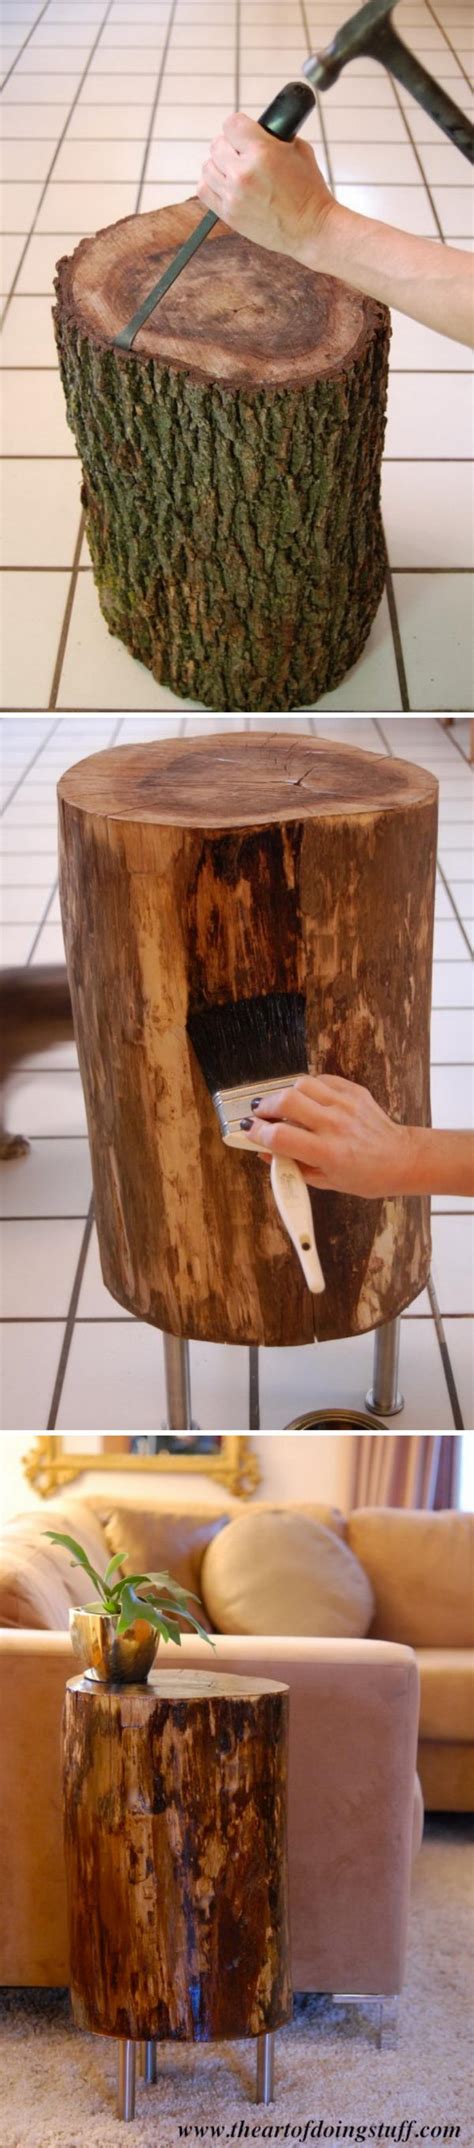 20 Ideas para reciclar troncos de madera y decorar tu hogar Soy Curioso